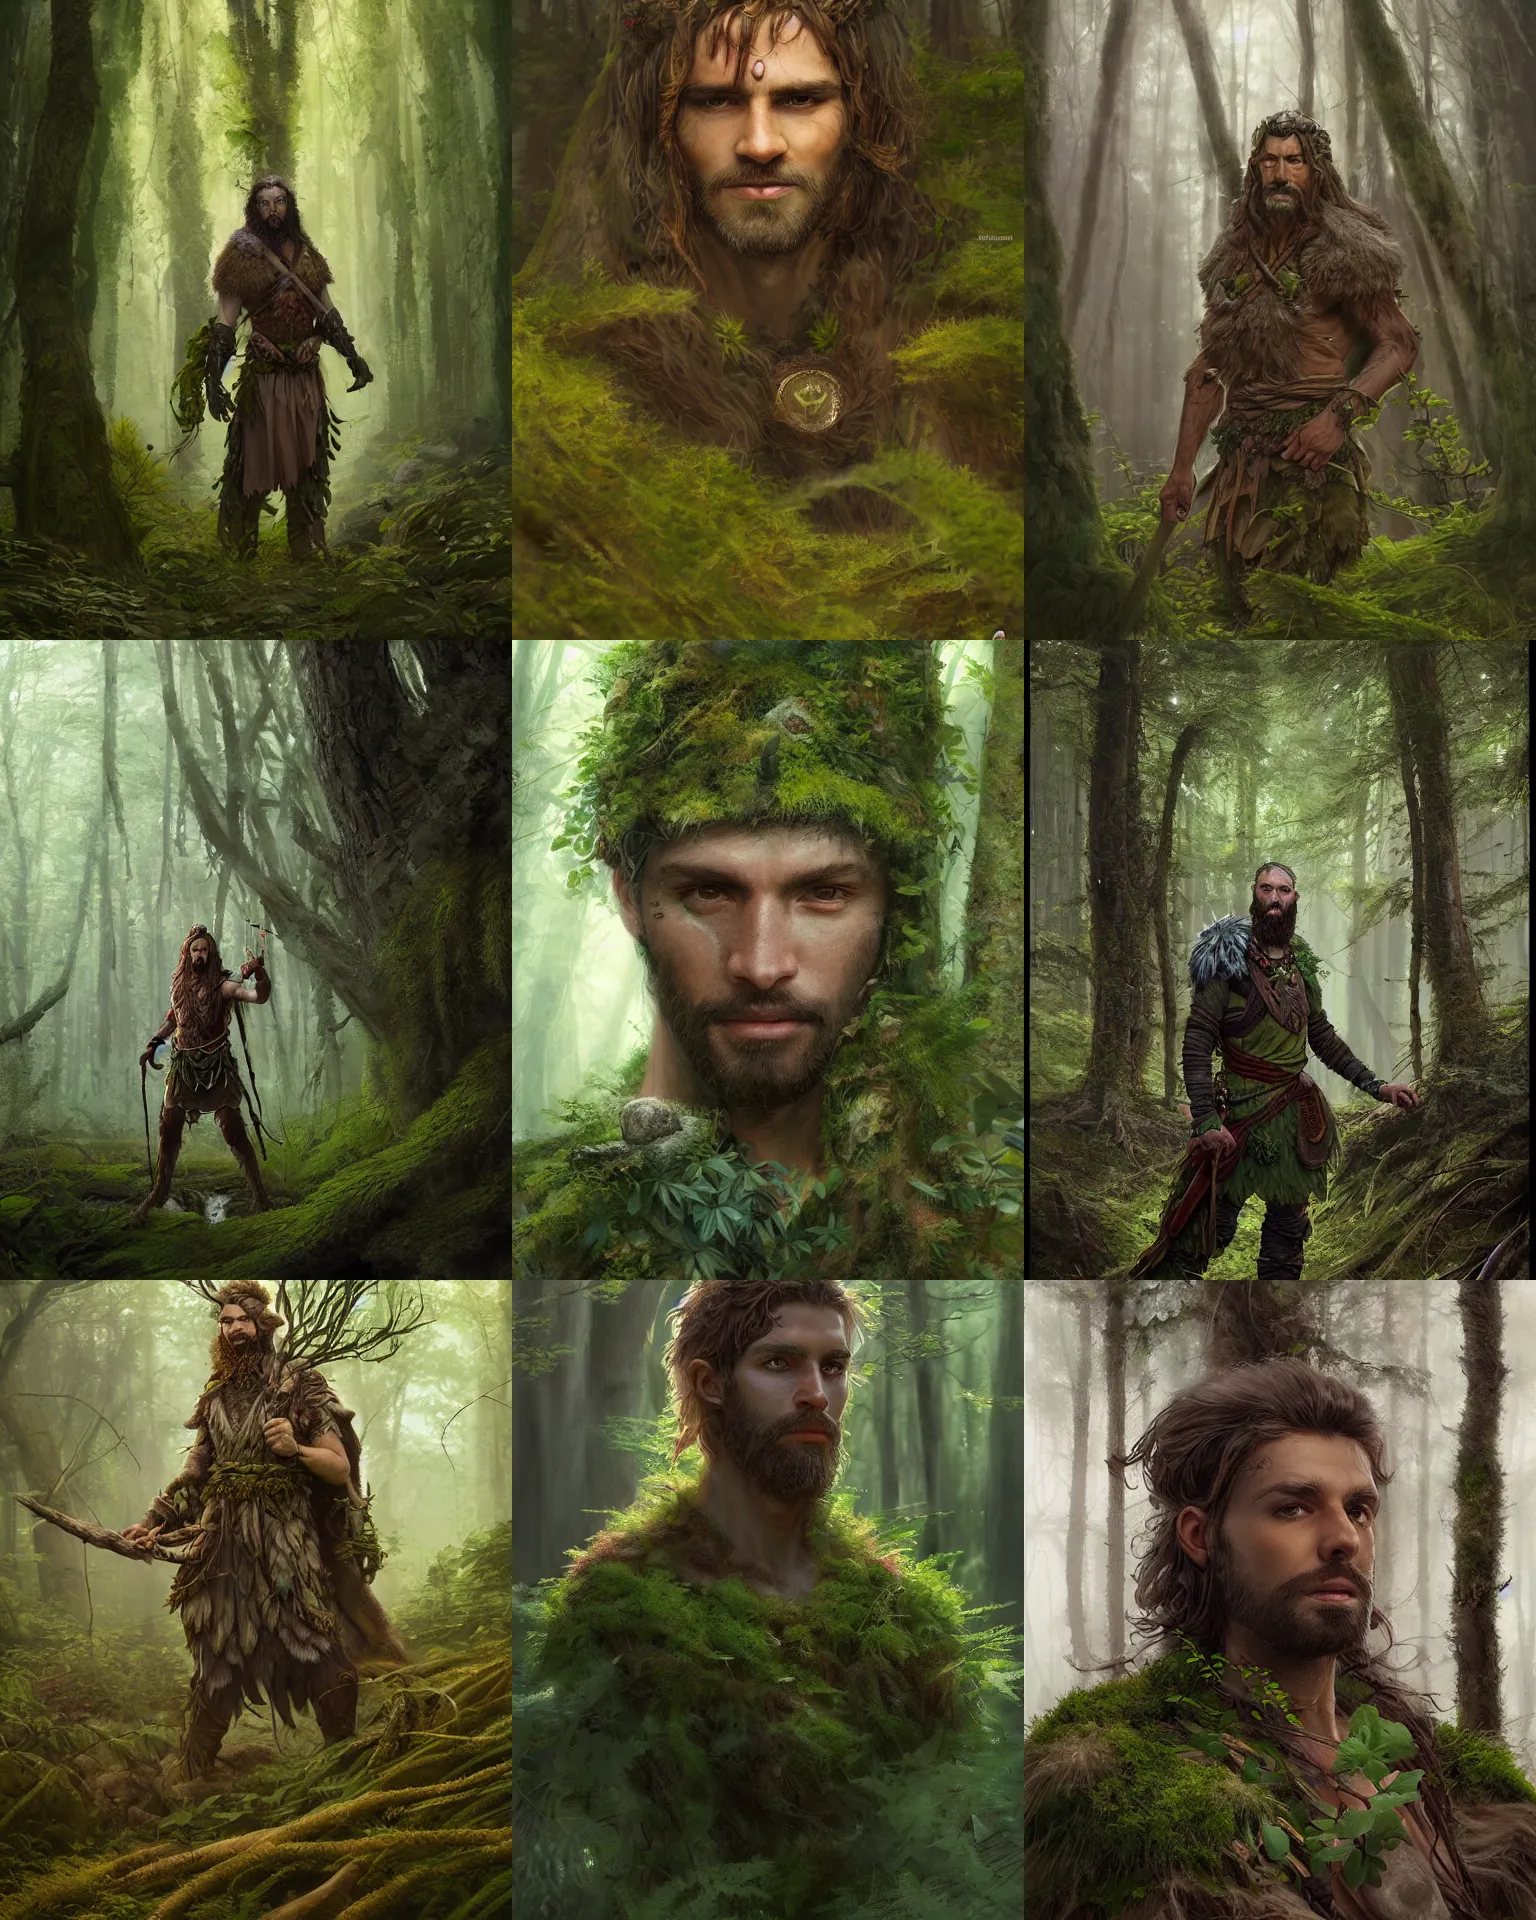 Prompt: Portrait male Druid warrior in a forest, wood branch moss plants, artgerm, andrei riabovitchev, nuri iyem, james gurney, james jean, greg rutkowski, highly detailed, soft lighting 8k resolution